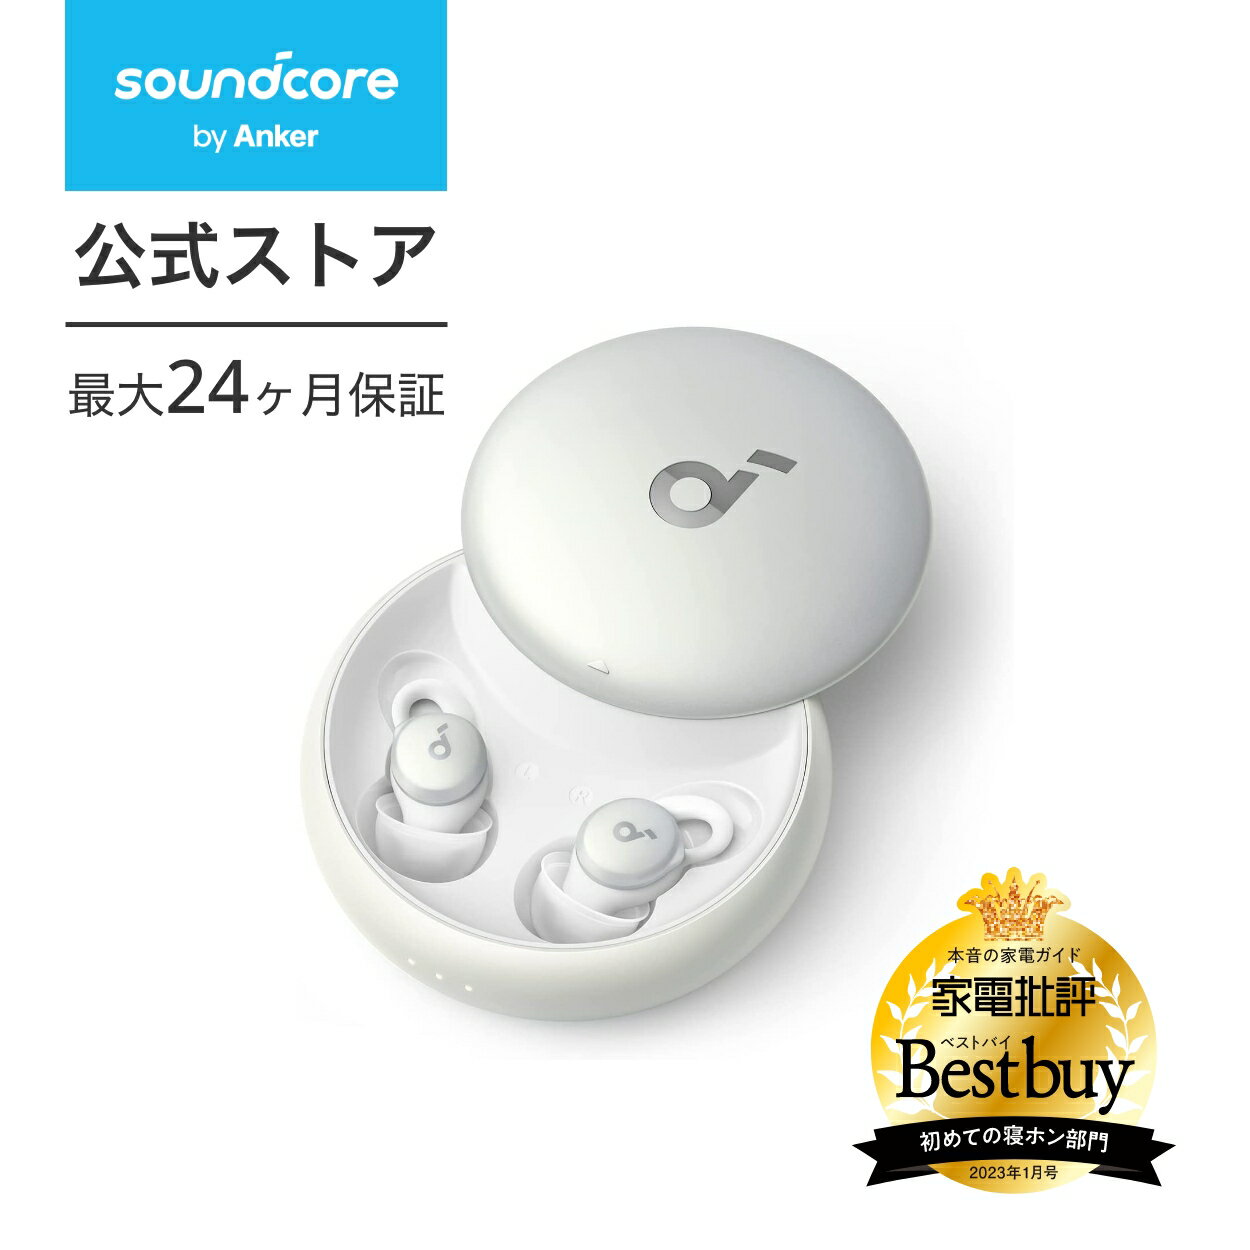 Anker Soundcore Sleep A10 ワイヤレスイヤホン Bluetooth 5.2 【完全ワイヤレスイヤホン / IPX4防水規格 / 最大47時間音楽再生 / 専用アプリ対応 / 睡眠時間のモニタリング / コンパクト / 軽…